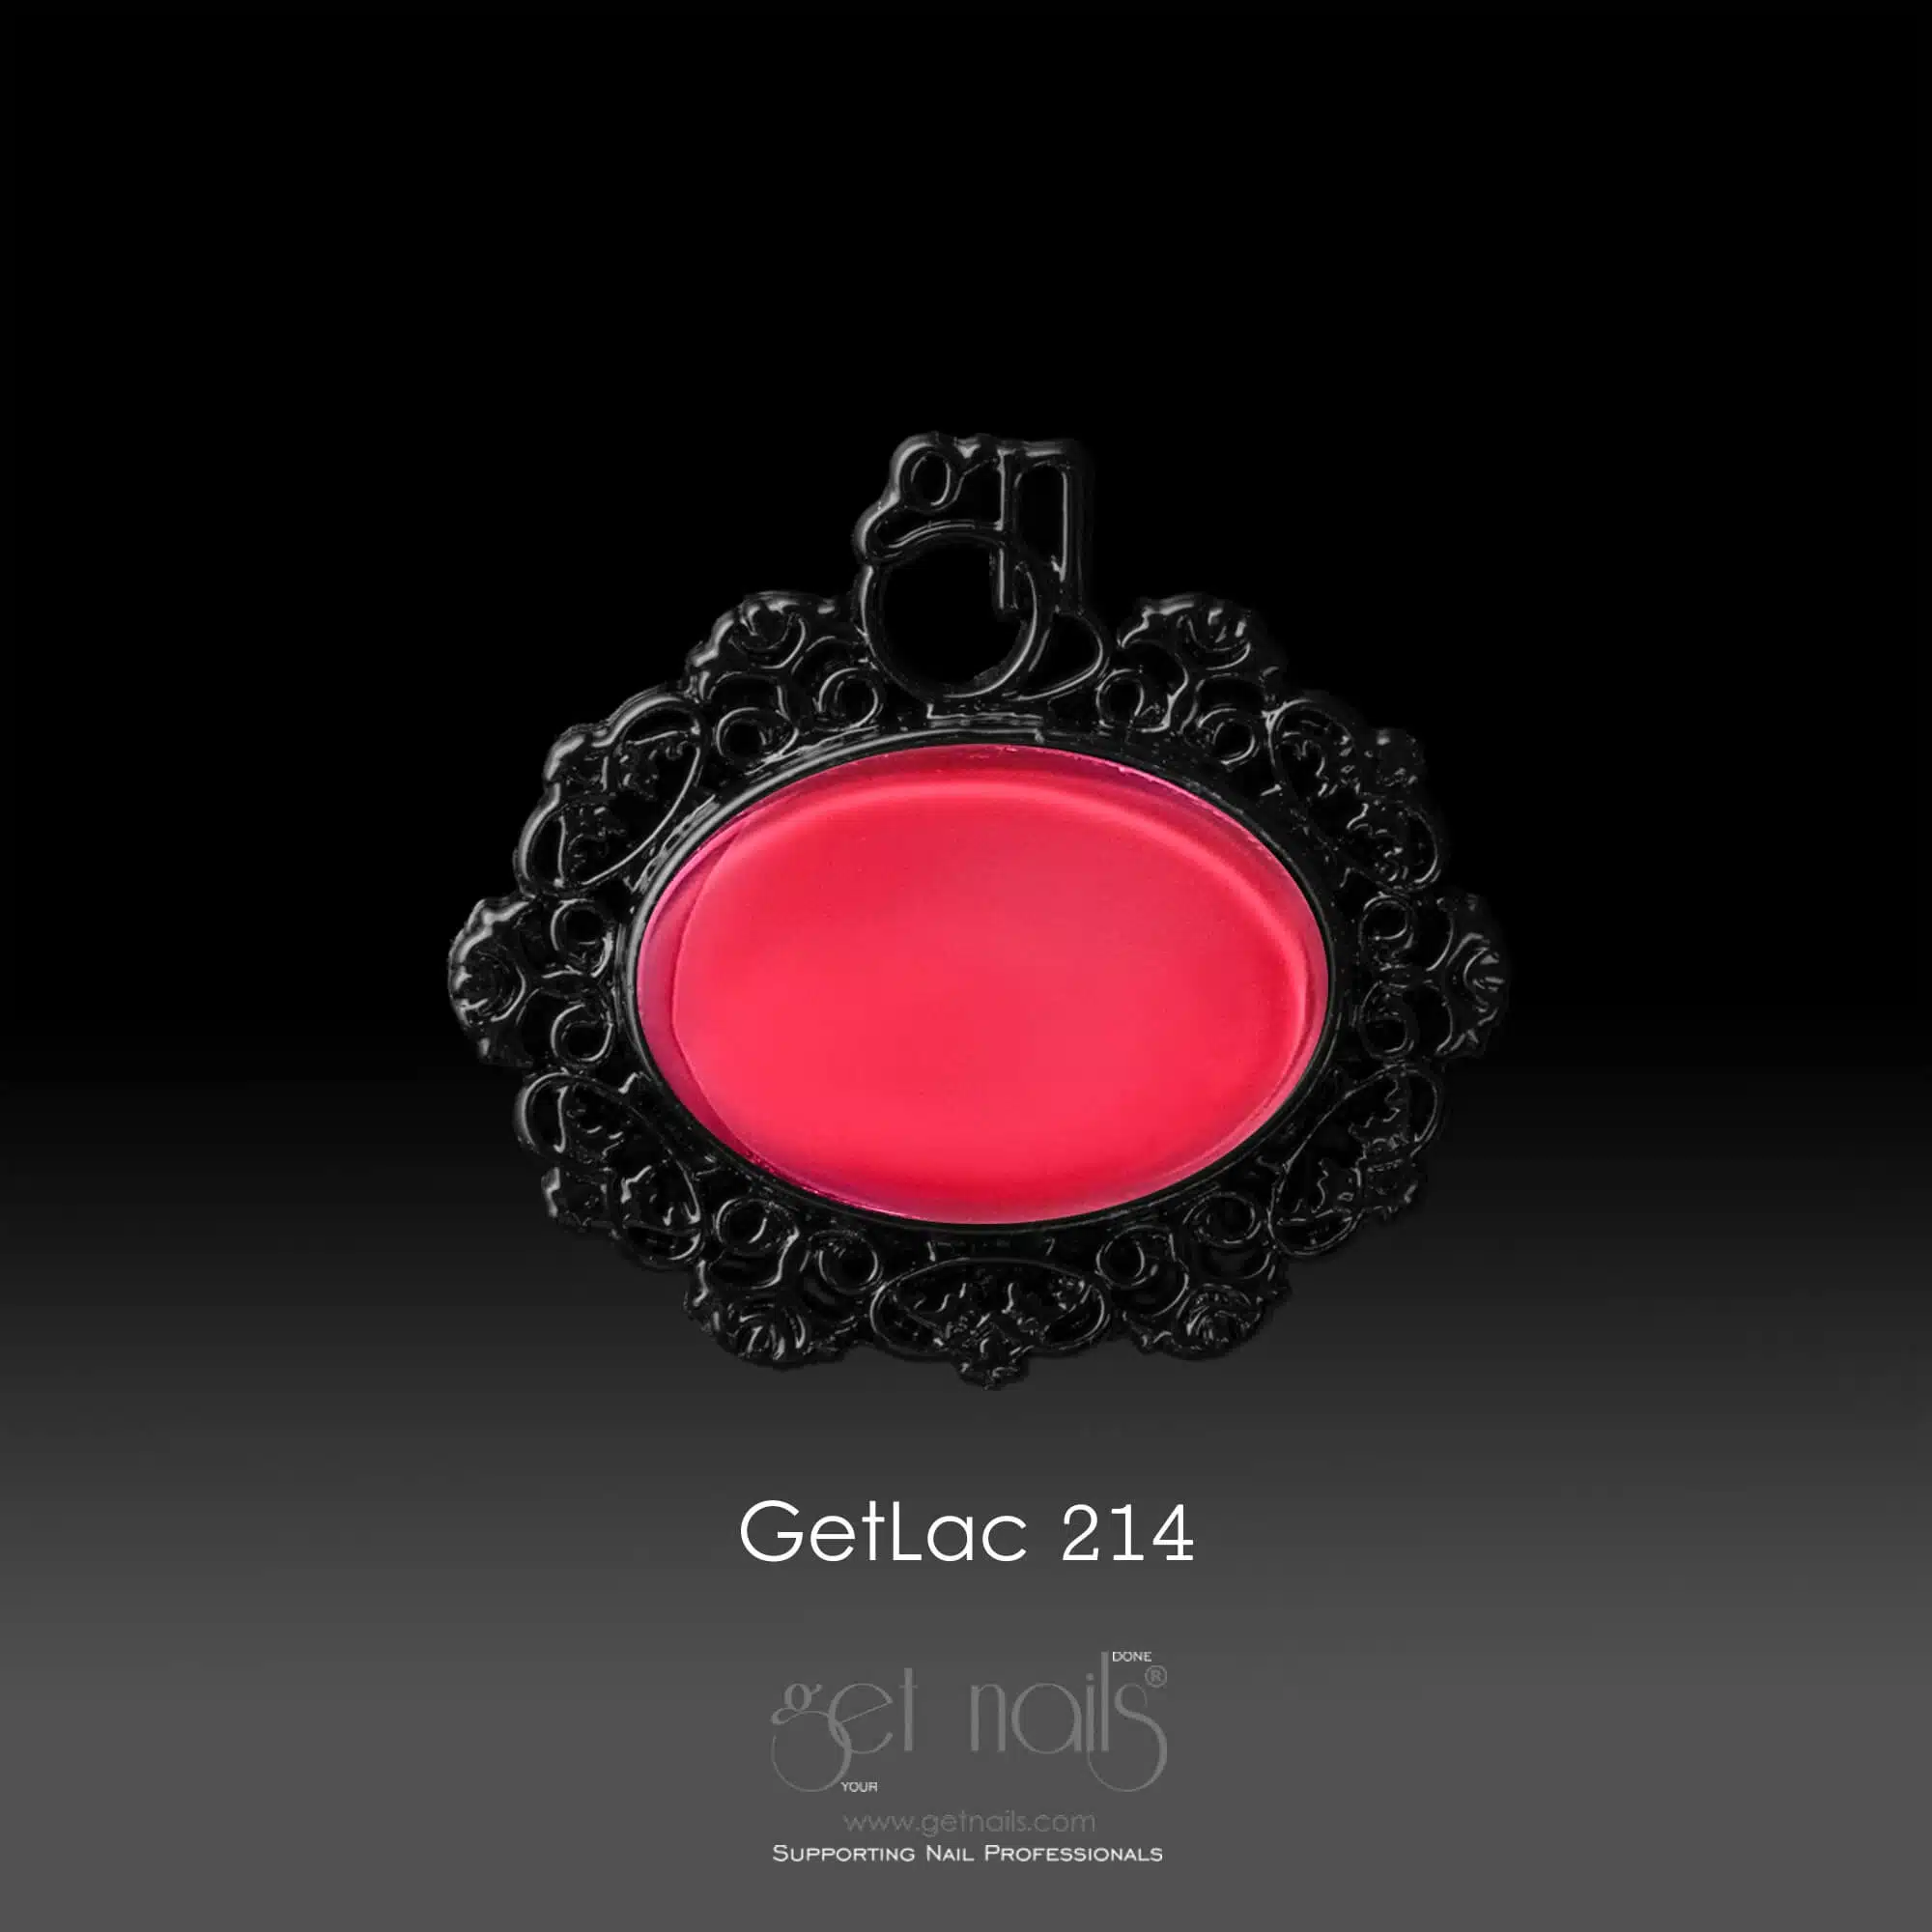 Get Nails Austria - GetLac 214 15г